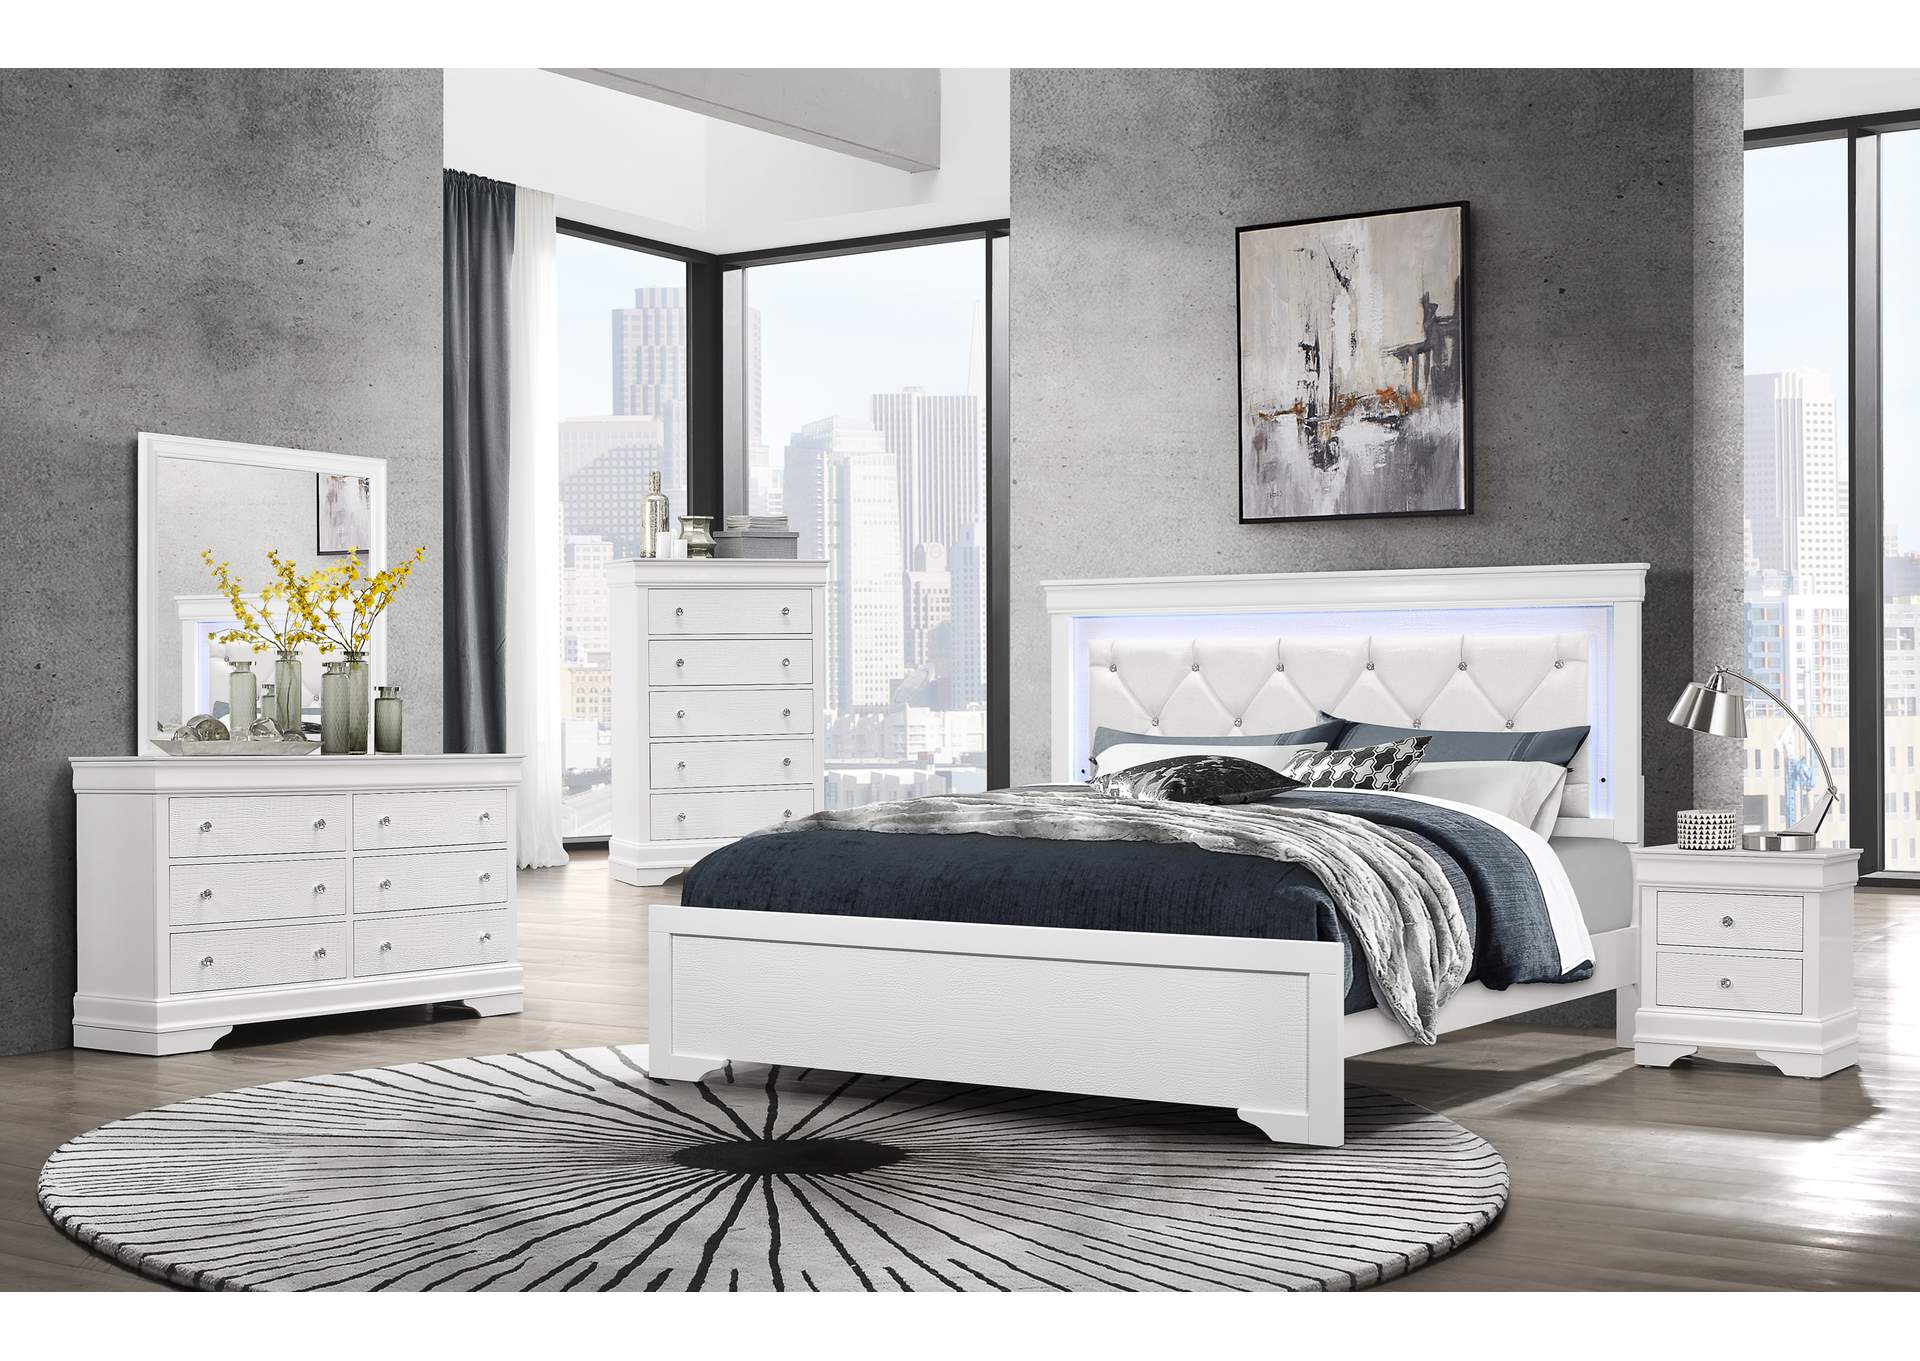 Metallic White Pompei Full Bed,Global Furniture USA